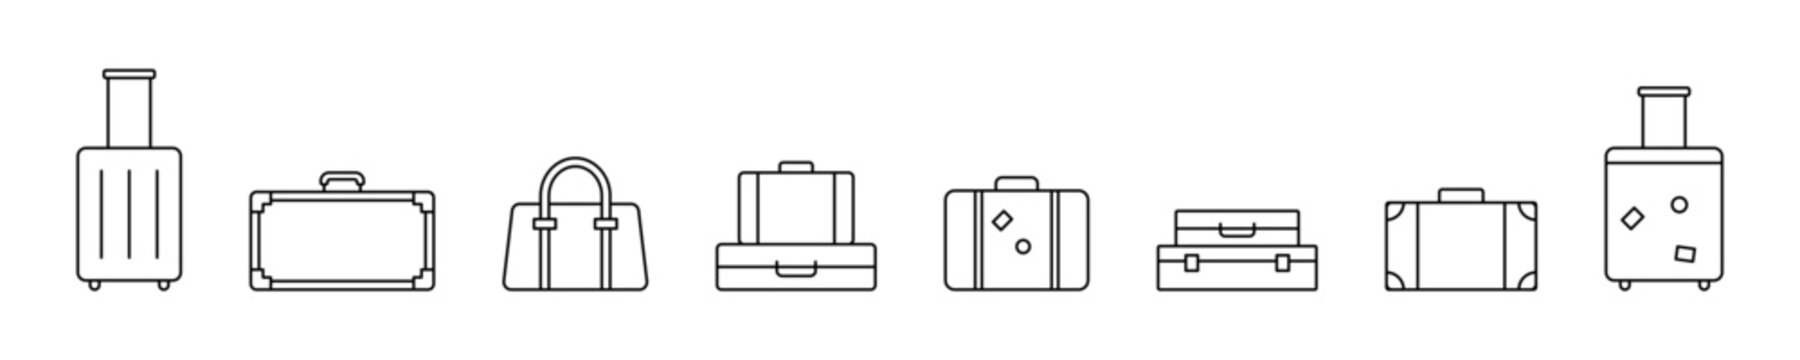 Travel luggage icon set. Baggage suitcase. Suitcase bag icon collection. EPS 10